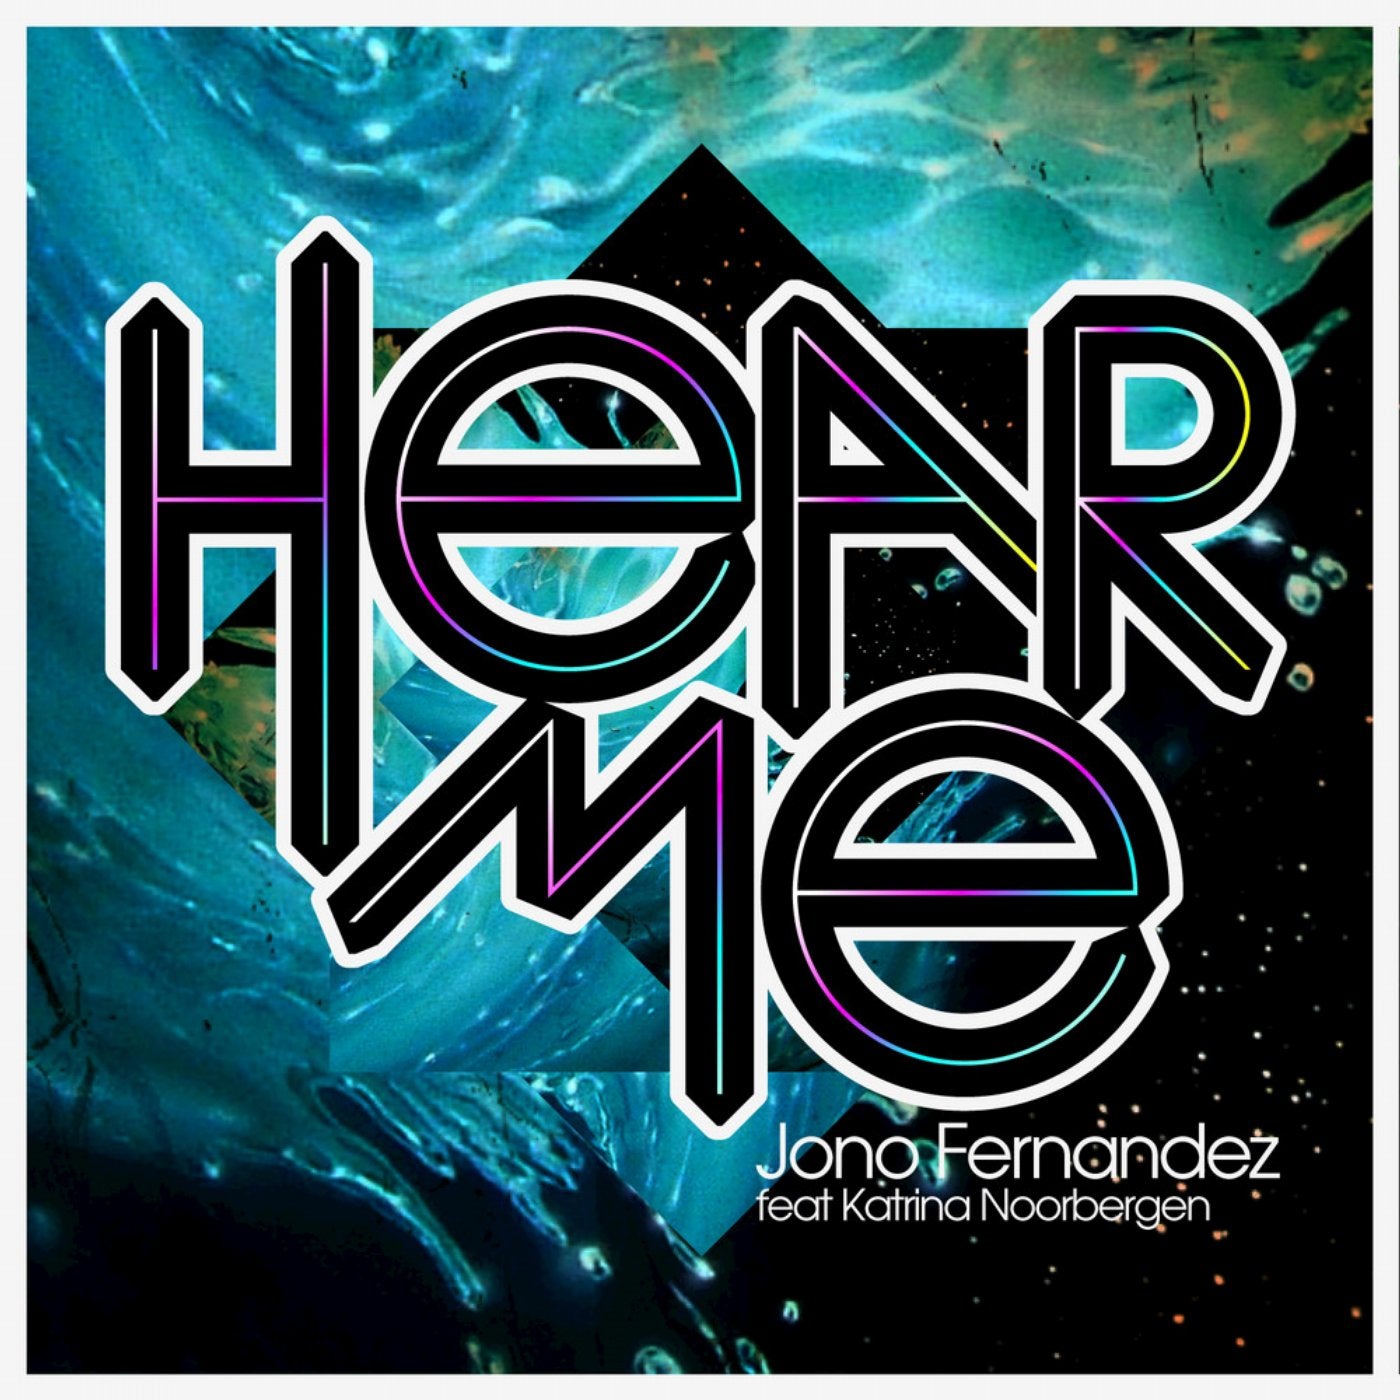 Hear Me (Remixes)